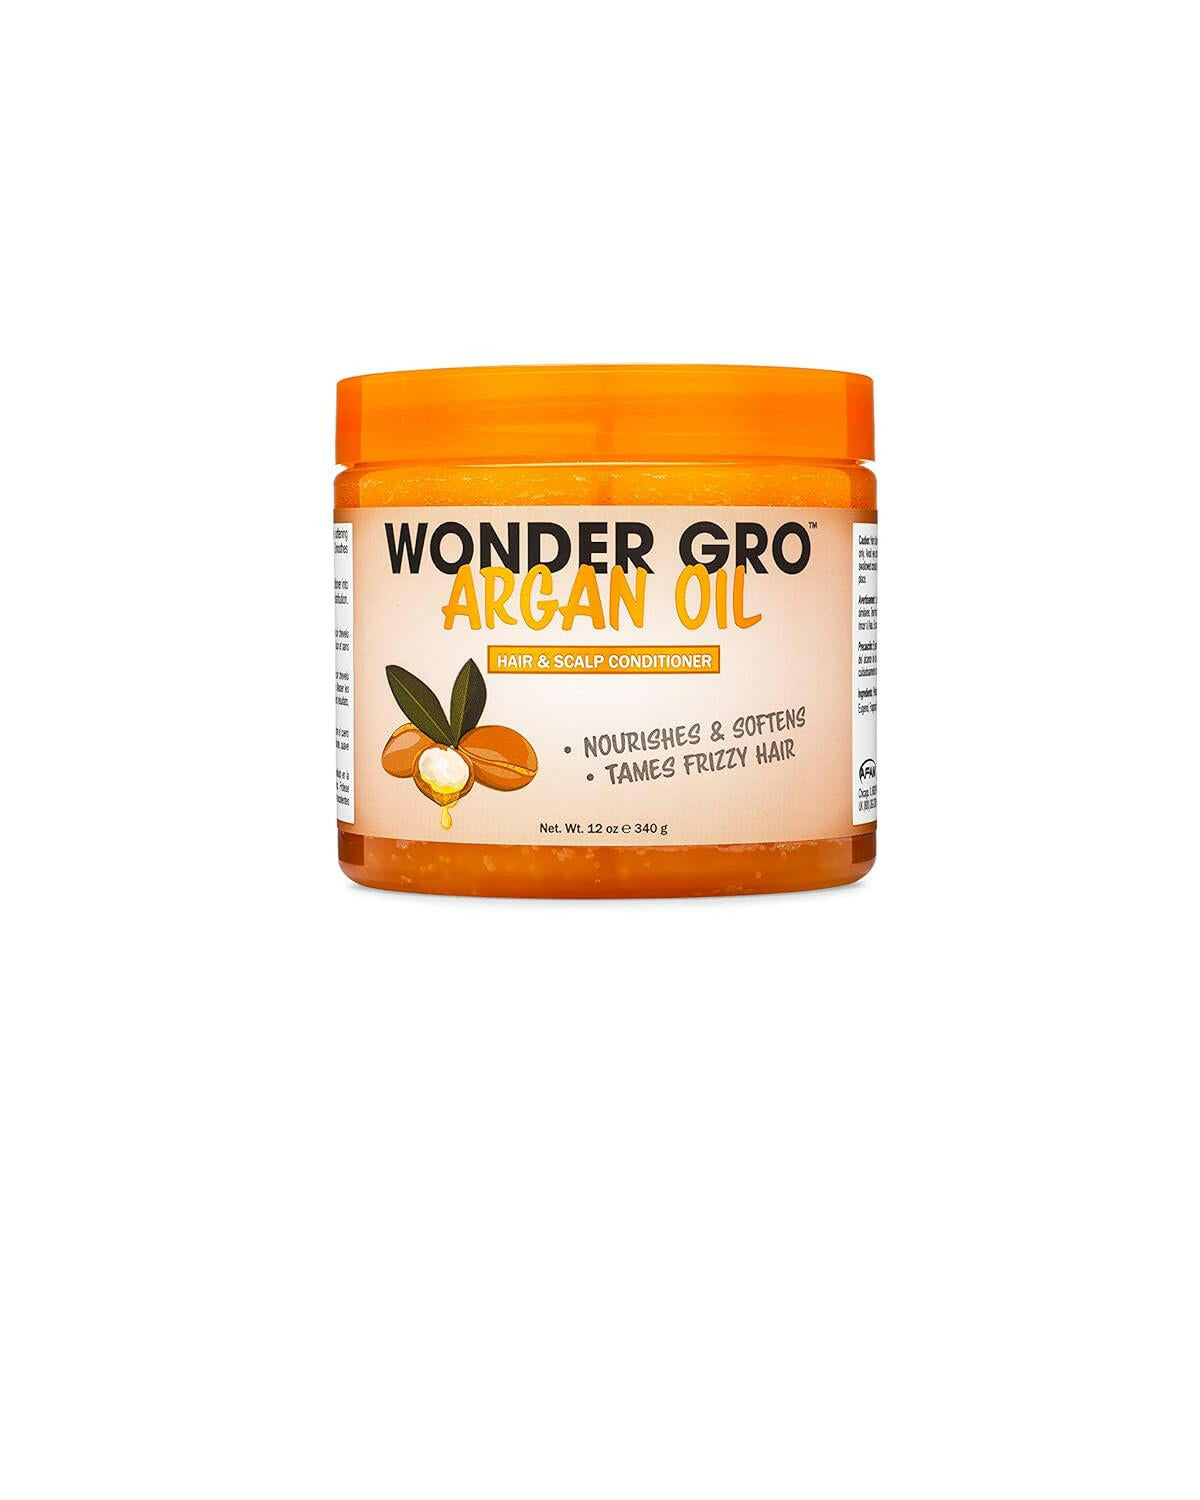 Wonder Gro Argan Oil Hair Grease Styling Conditioner, 12 oz